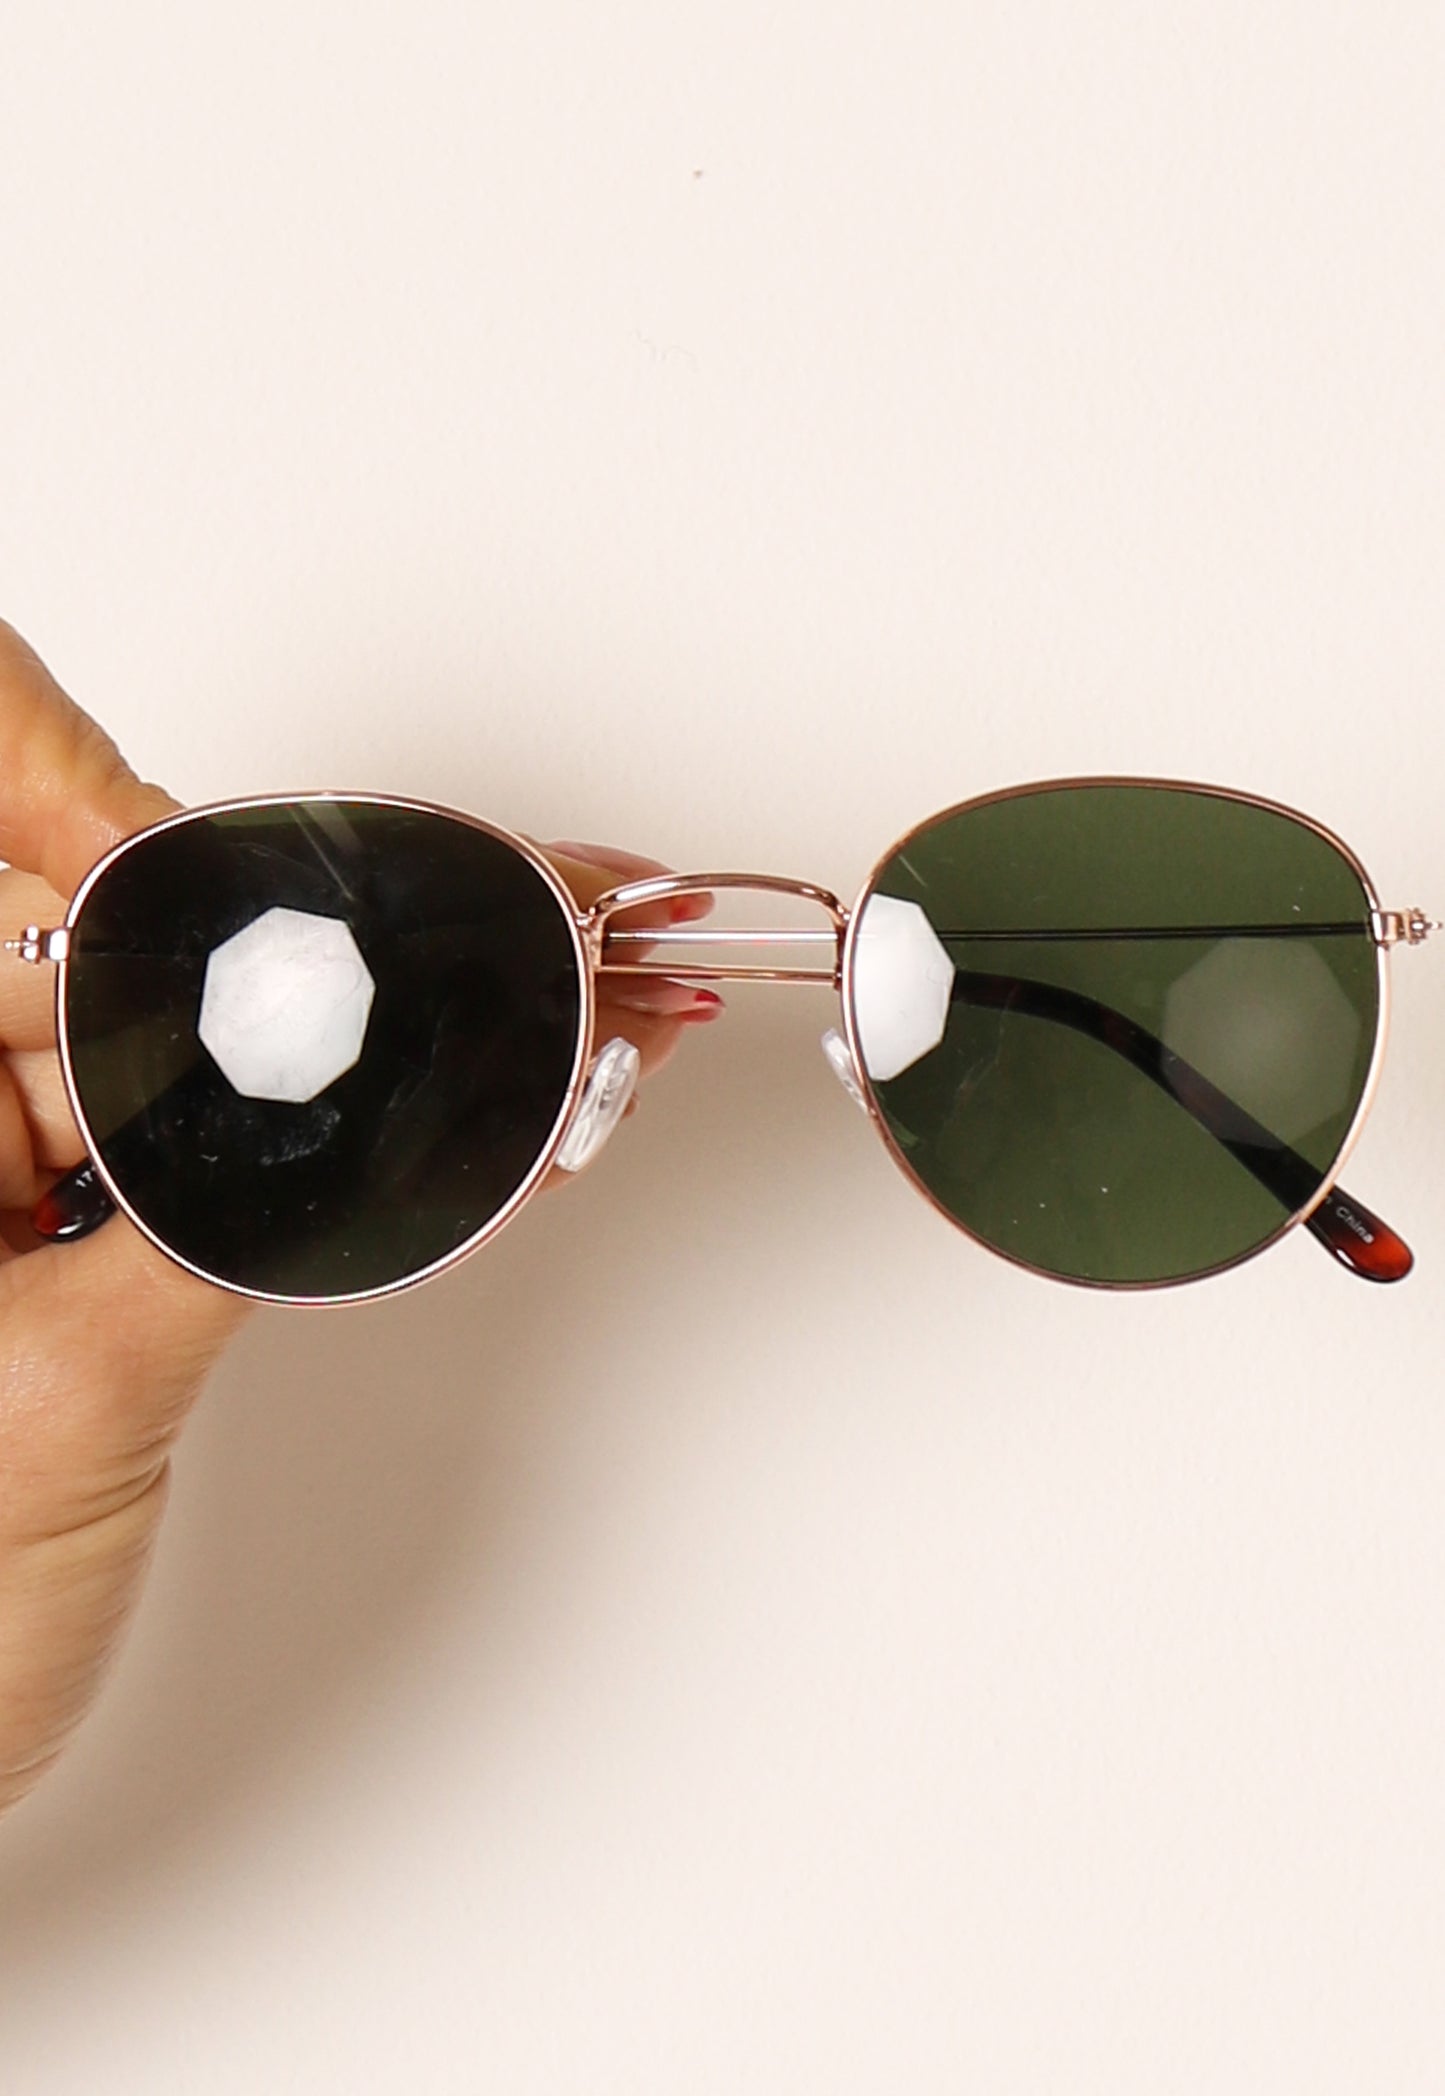 NEW Small Square Sunglasses Men's Women HIP-HOP Punk Style Black Shades  Glasses | eBay